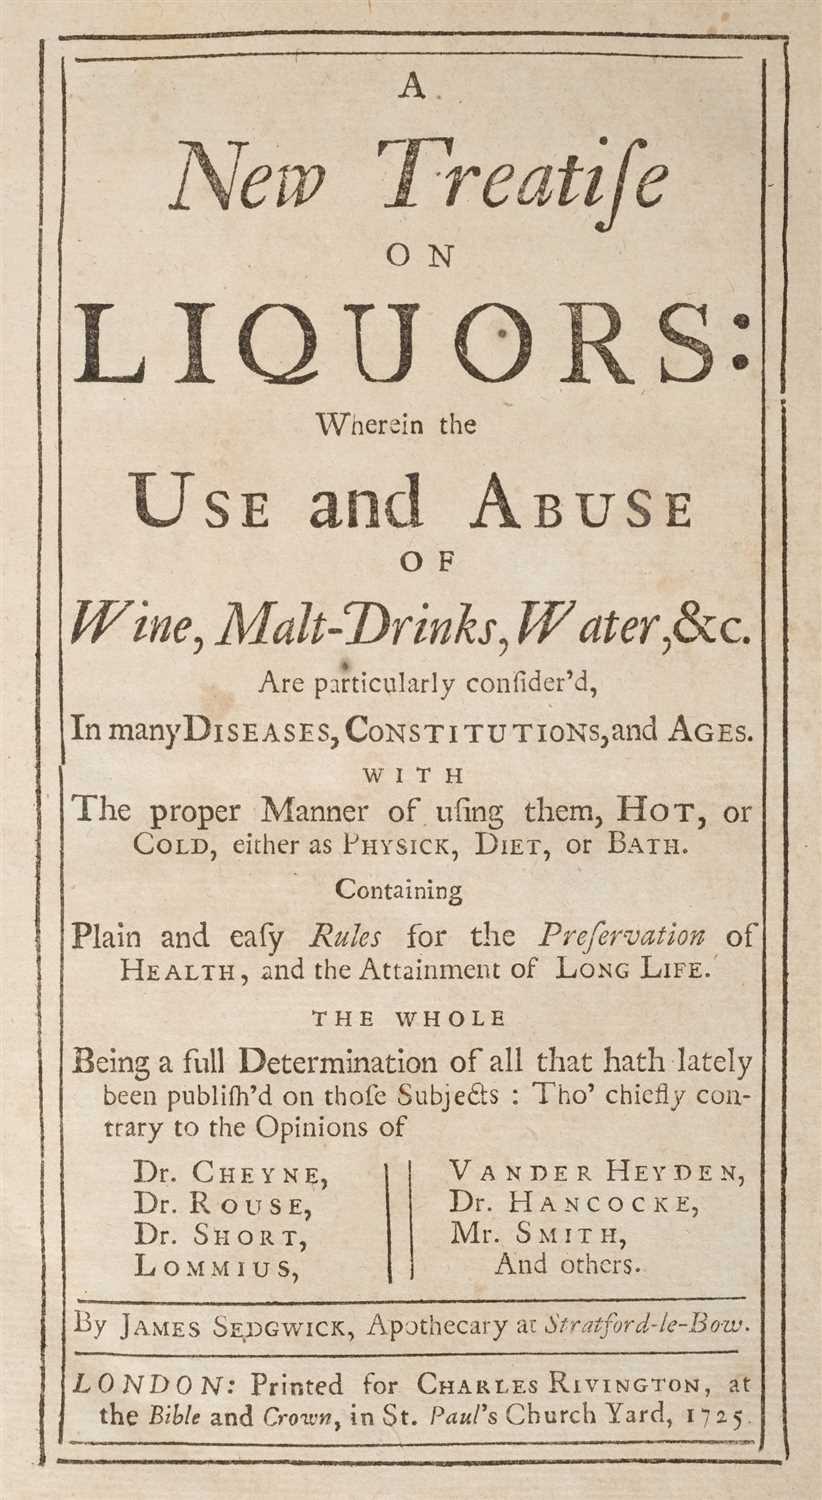 Lot 154 - Sedgwick (James). A New Treatise on Liquors, 1725